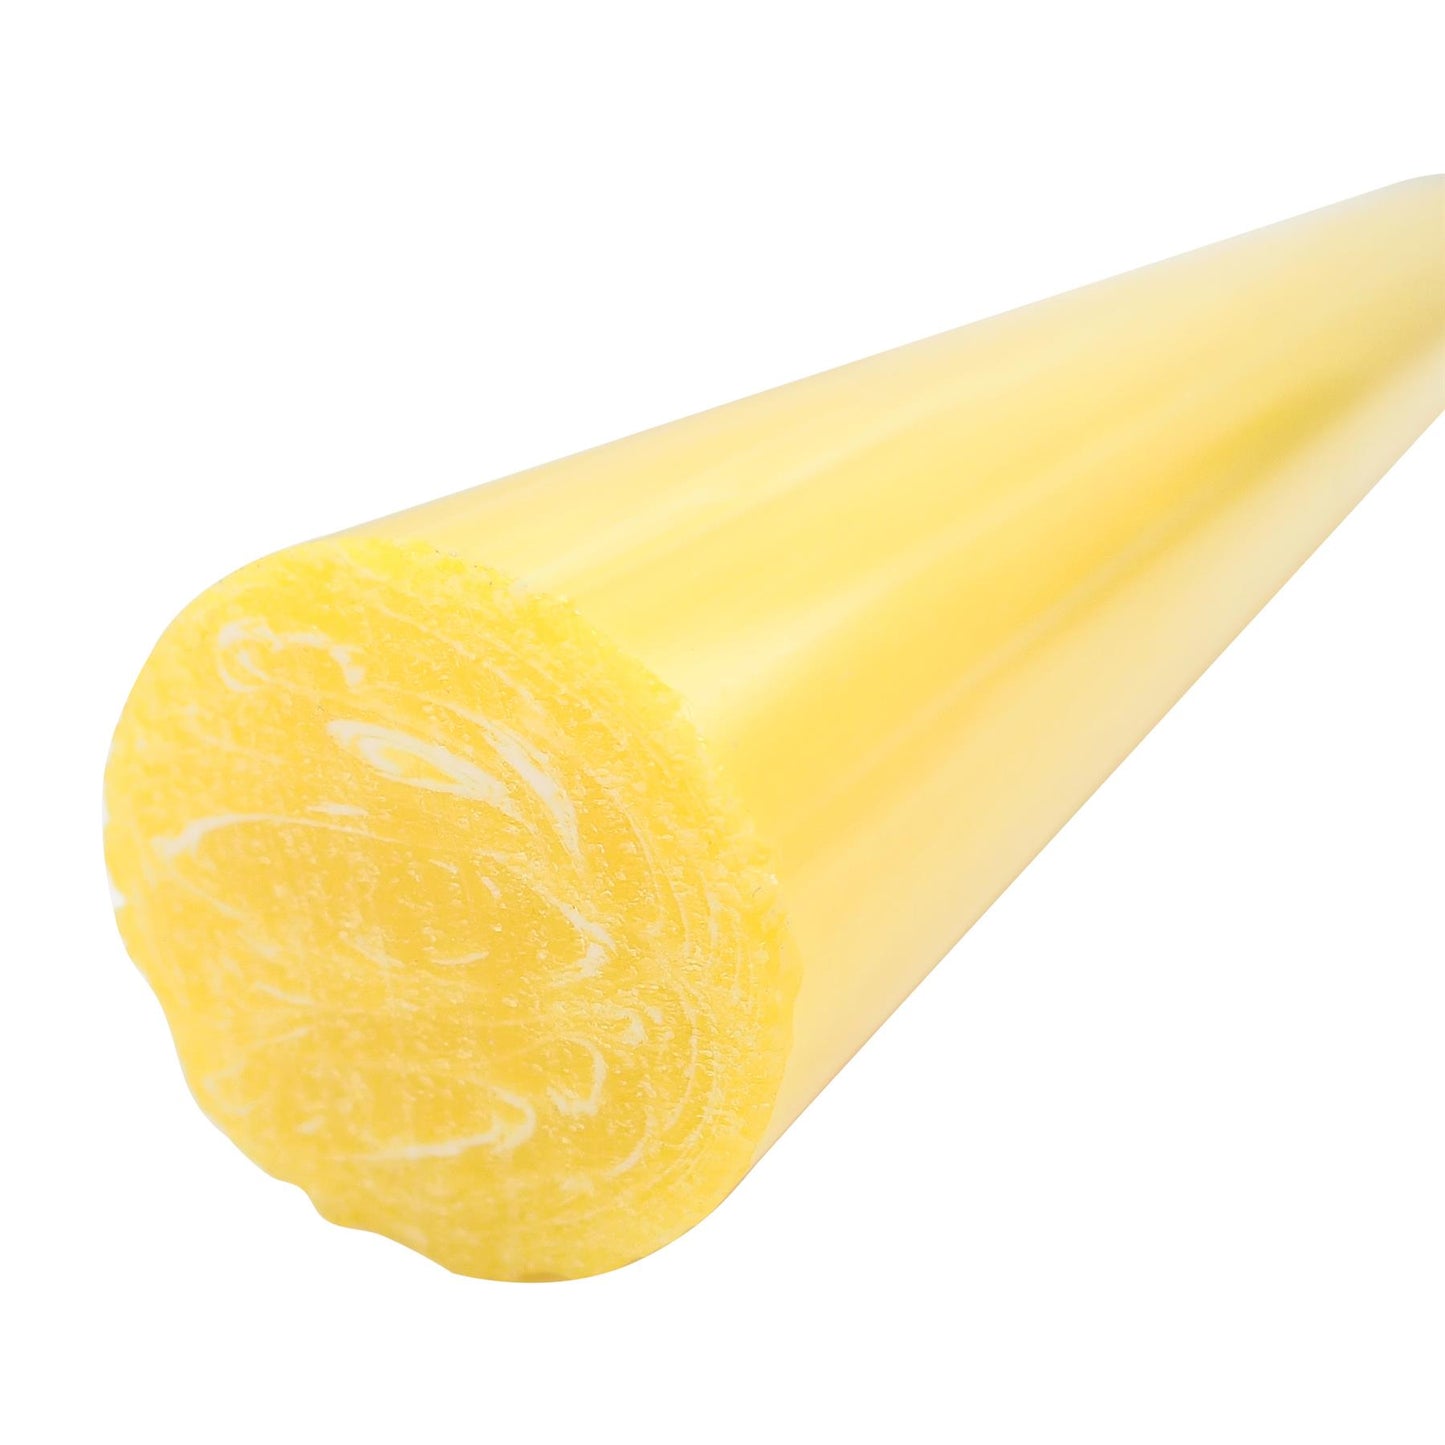 Turners' Mill Lemon Yellow Polyester Turning Blank - 150x45x45mm